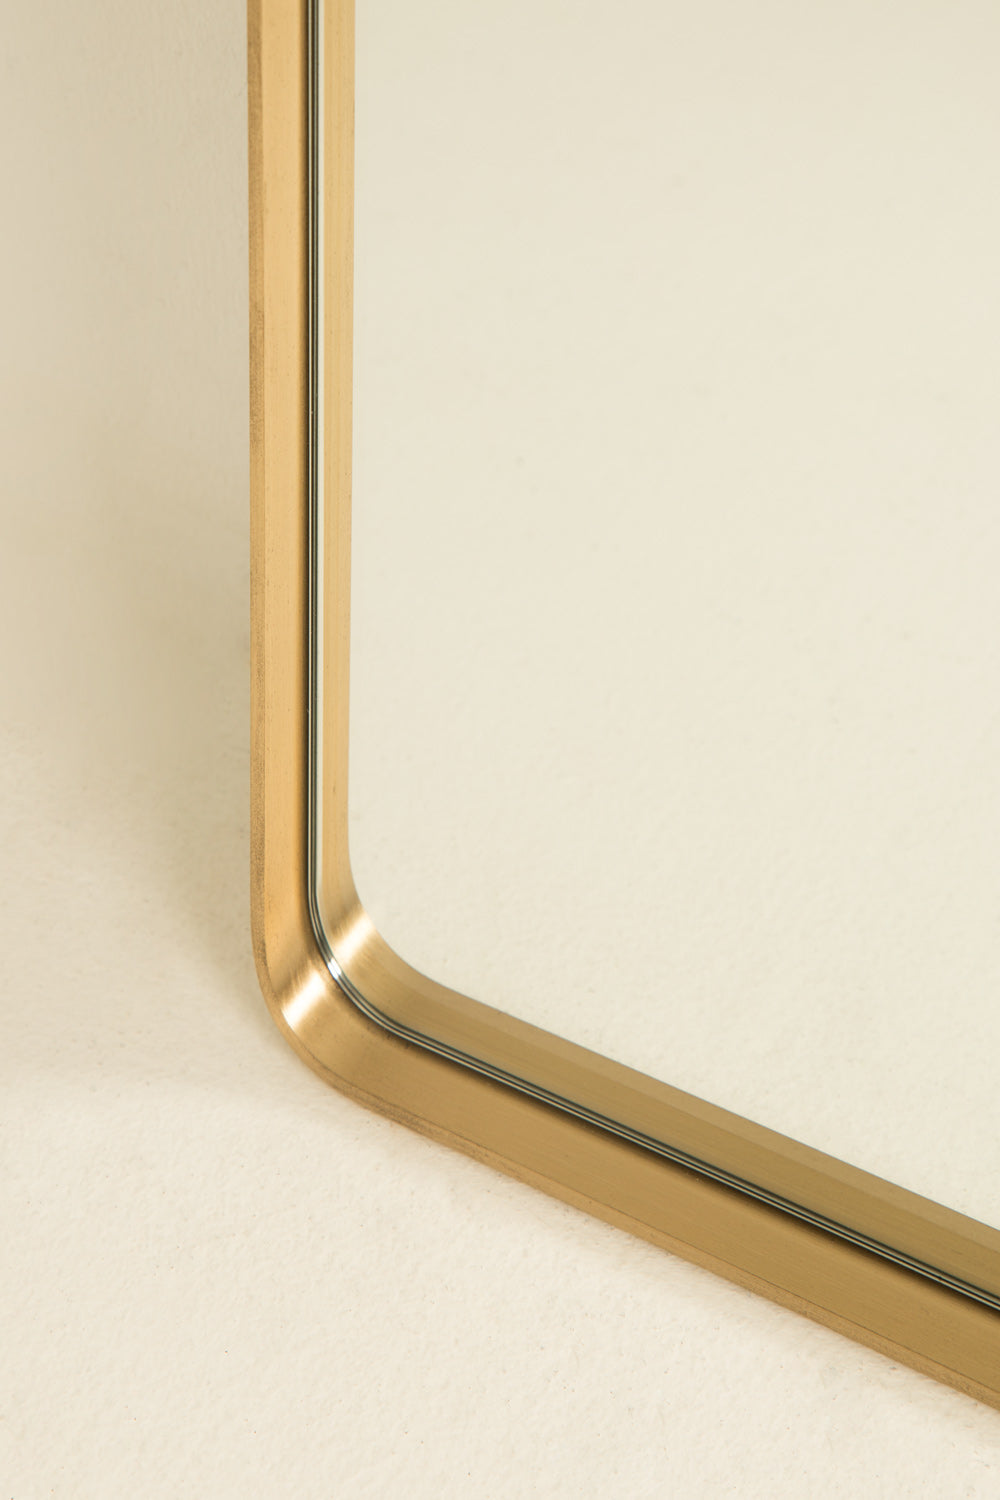 Here Mirror Sample - 600 x 1200mm - Blackened Brass